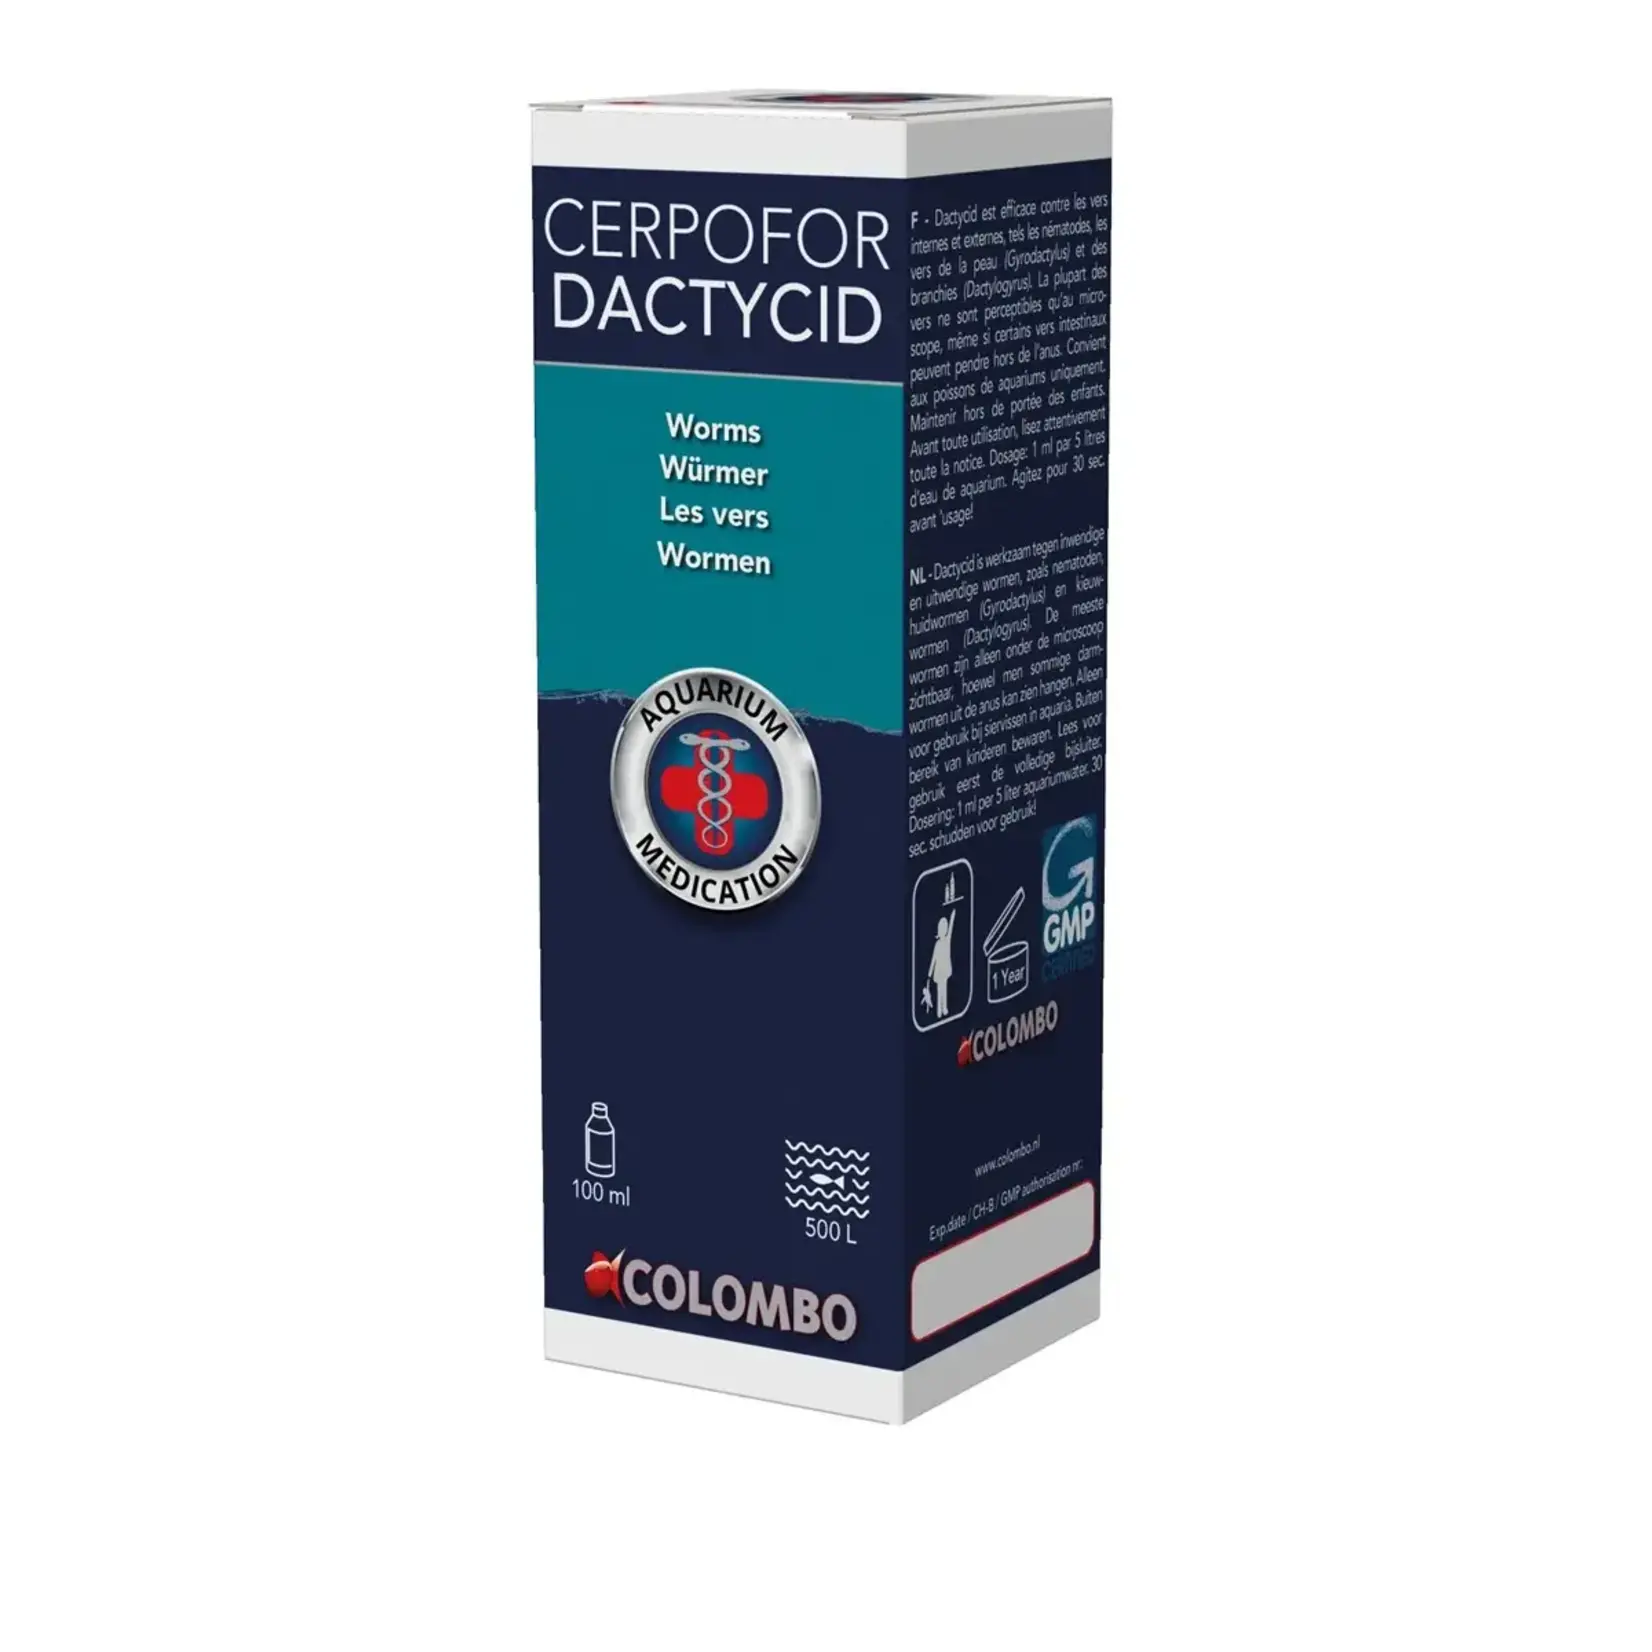 Cerpofor dactycid 100ml-500l